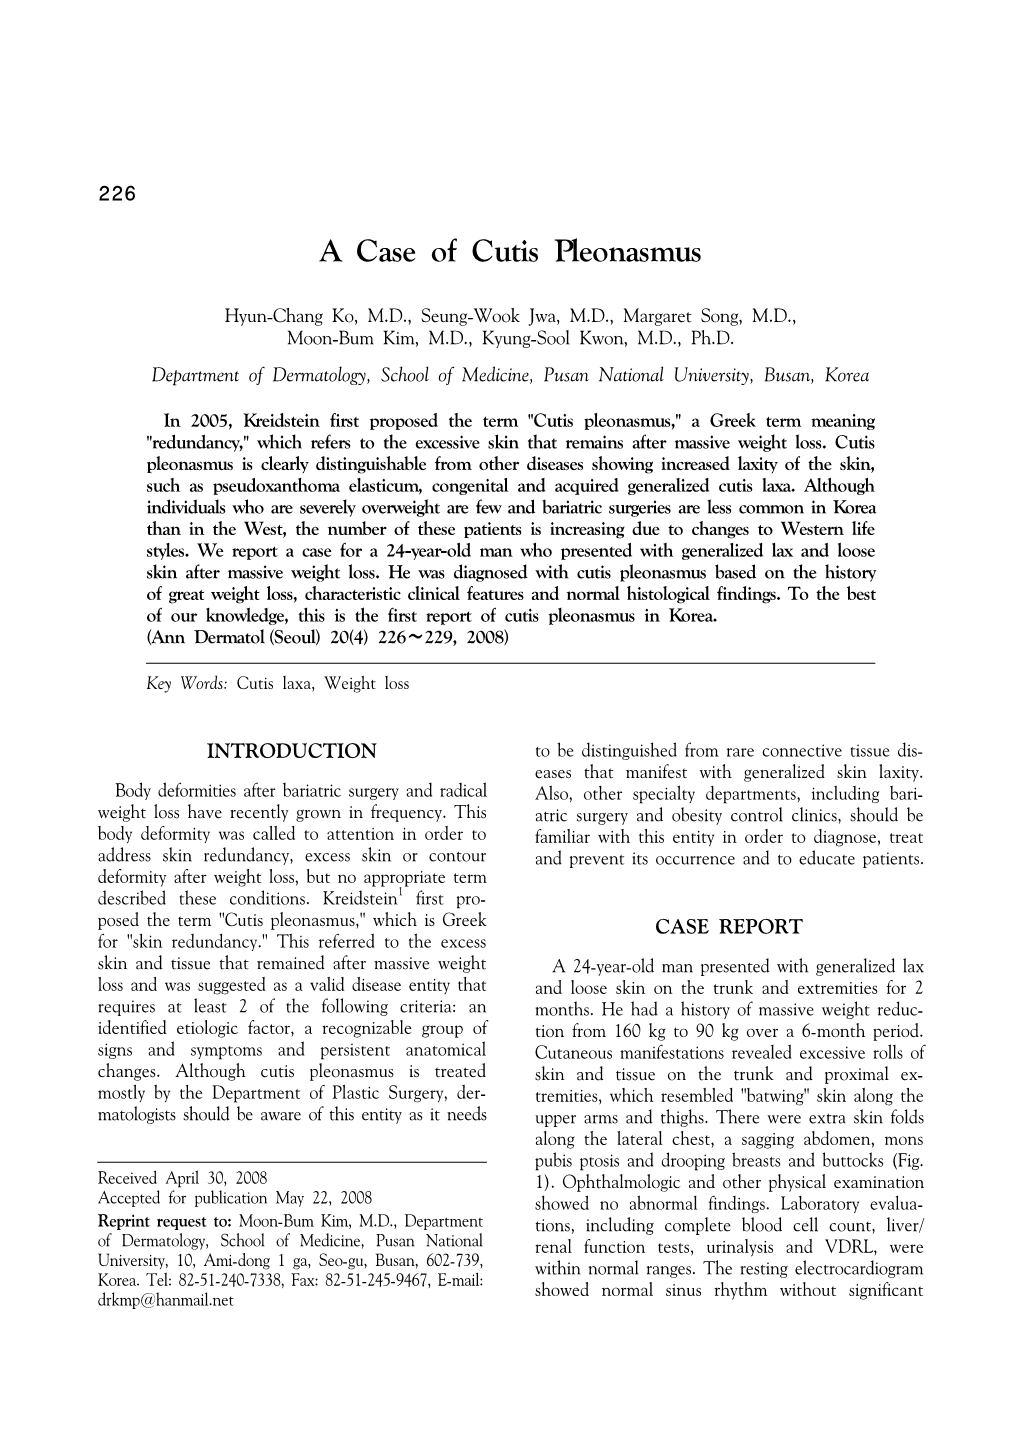 A Case of Cutis Pleonasmus